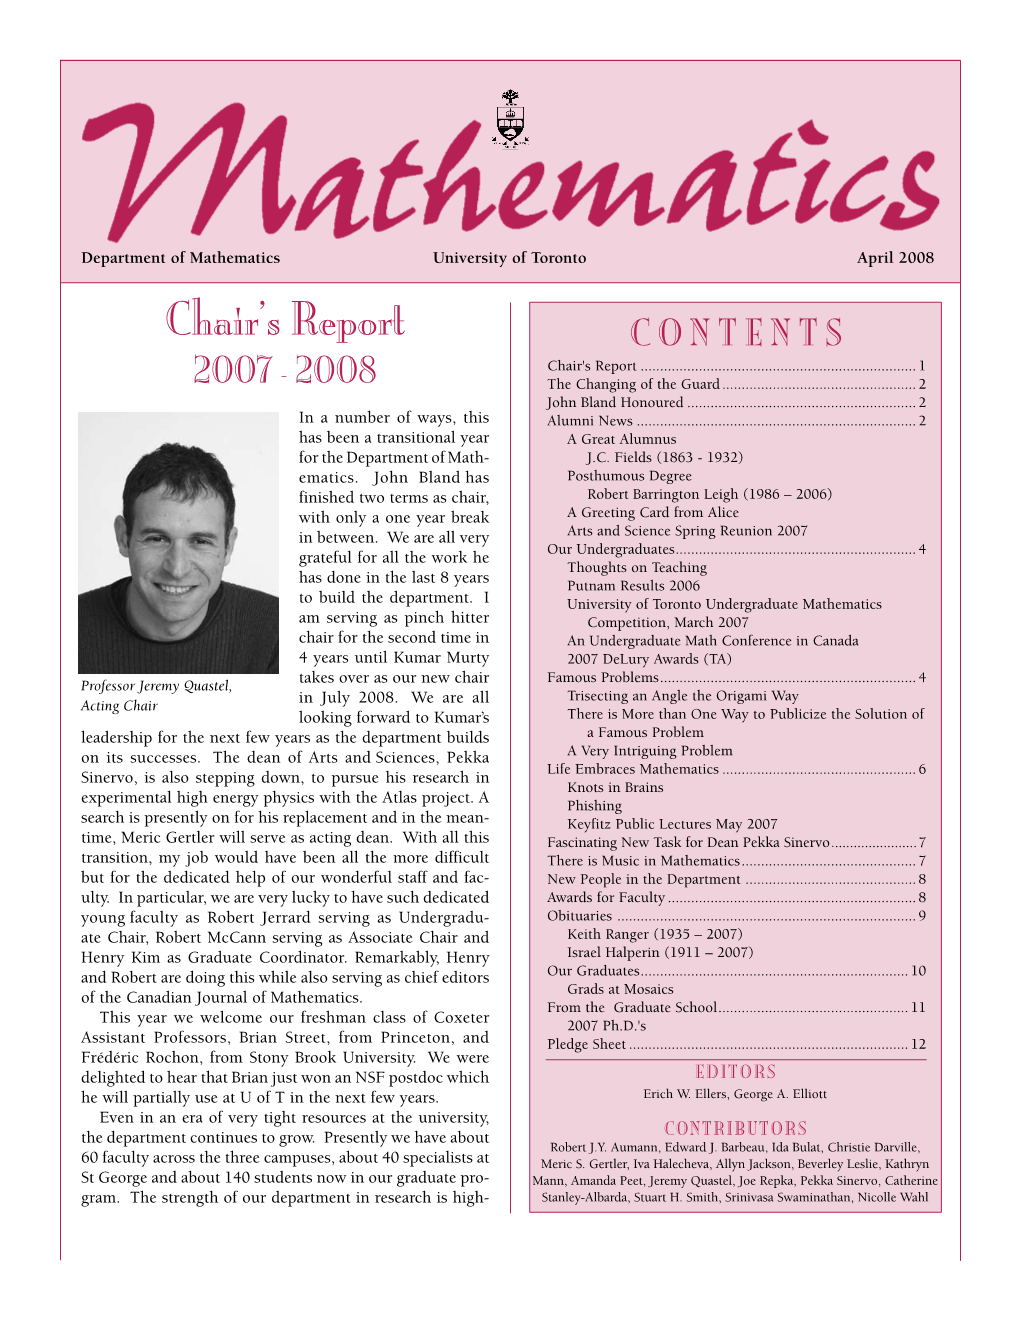 Another Math Department Newsletter